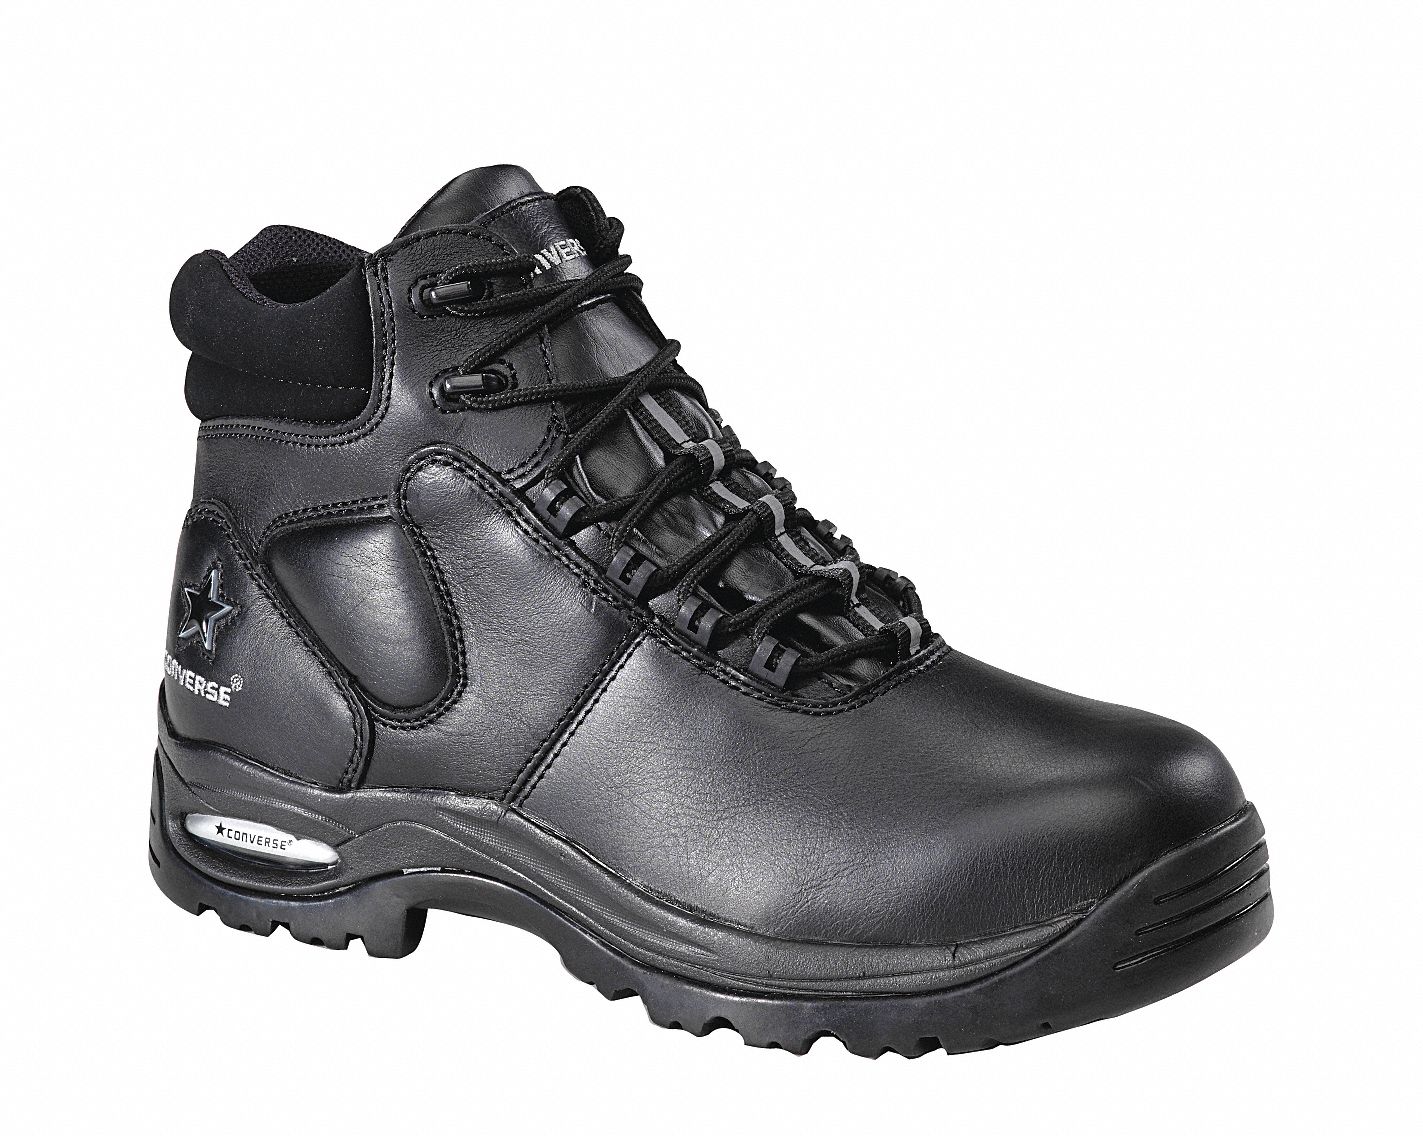 converse steel toe work boots